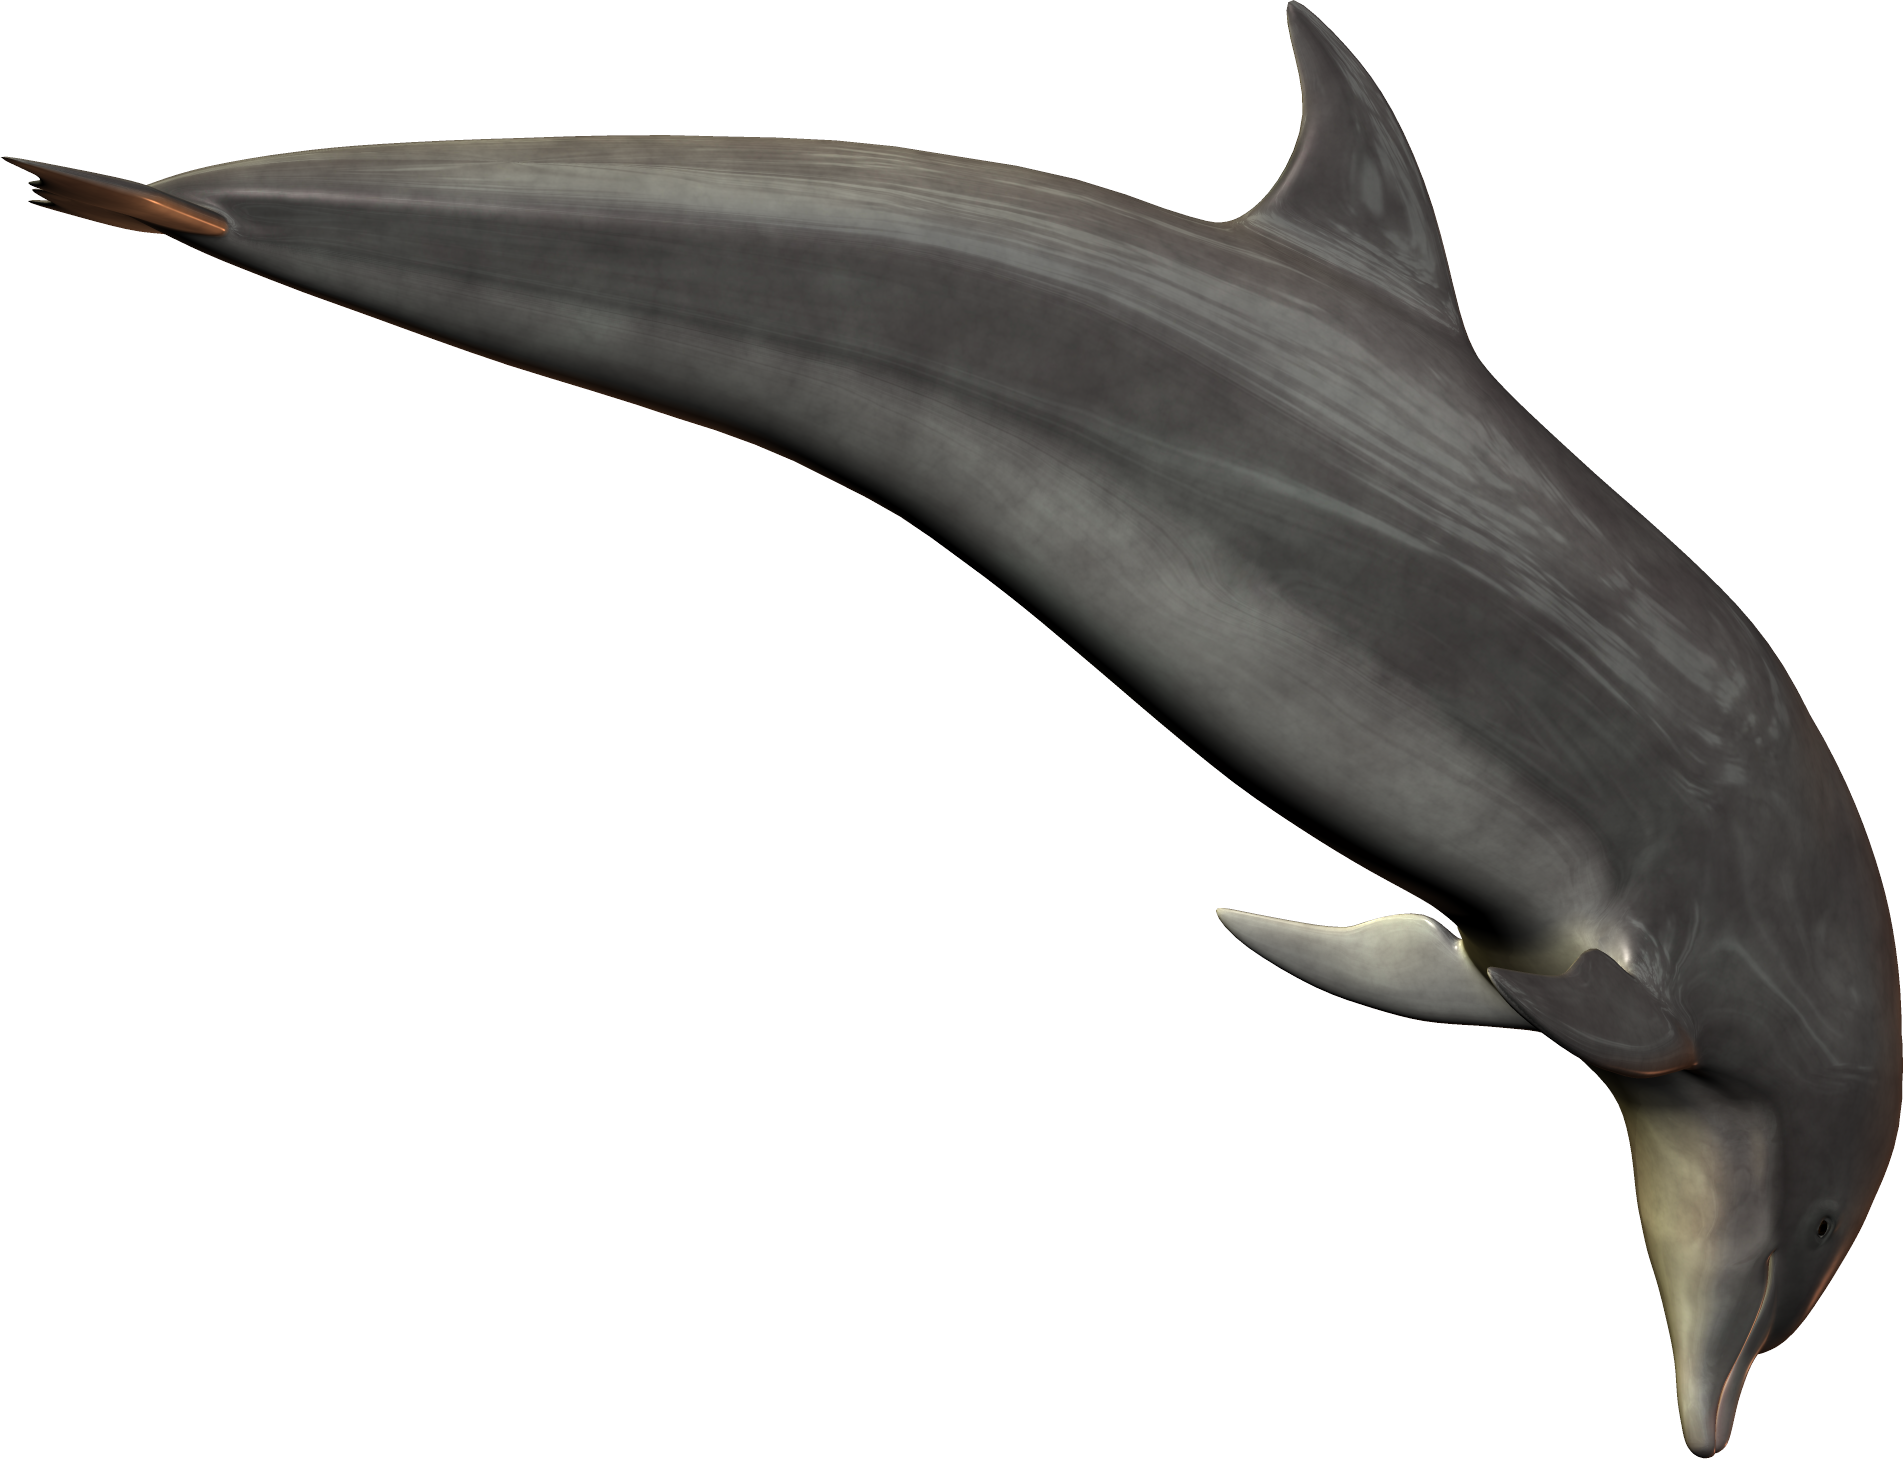 fat clipart dolphin